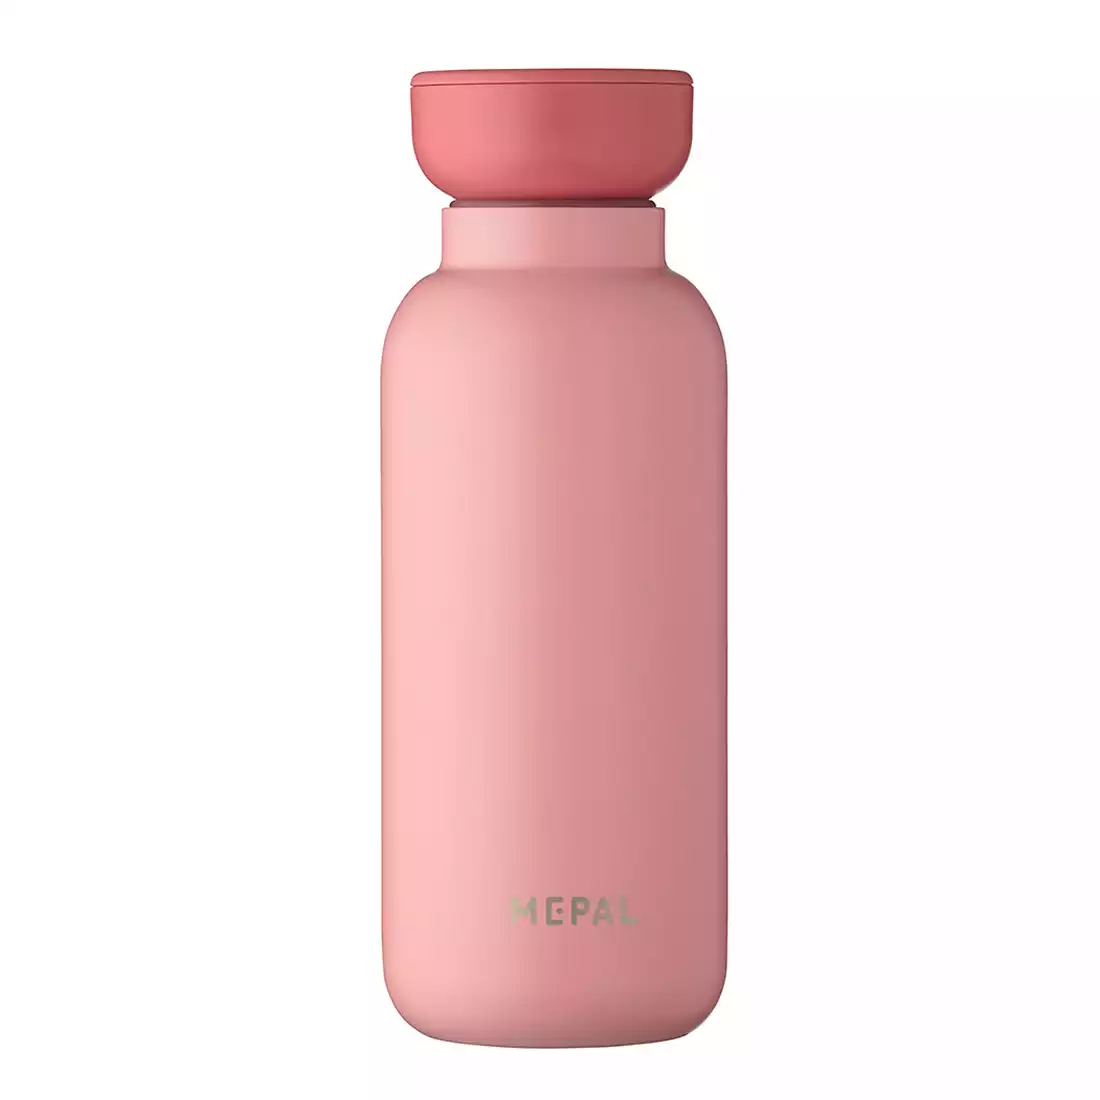 MEPAL ELLIPSE thermal bottle 350 ml, nordic pink